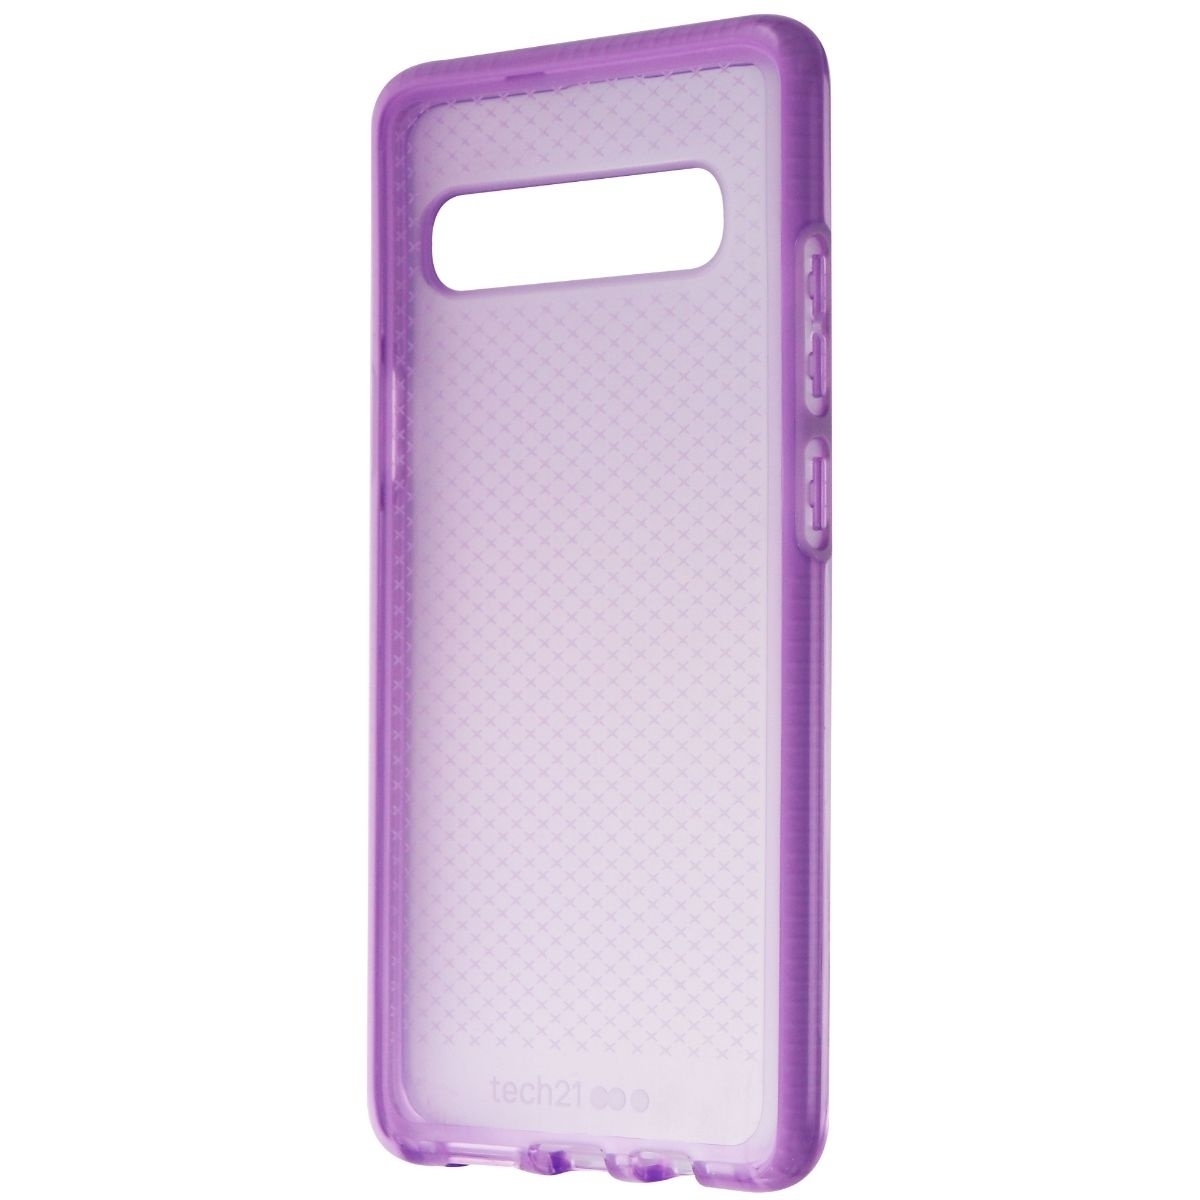 Tech21 Evo Check Flexible Gel Case For Samsung Galaxy S10 5G - Orchid Purple